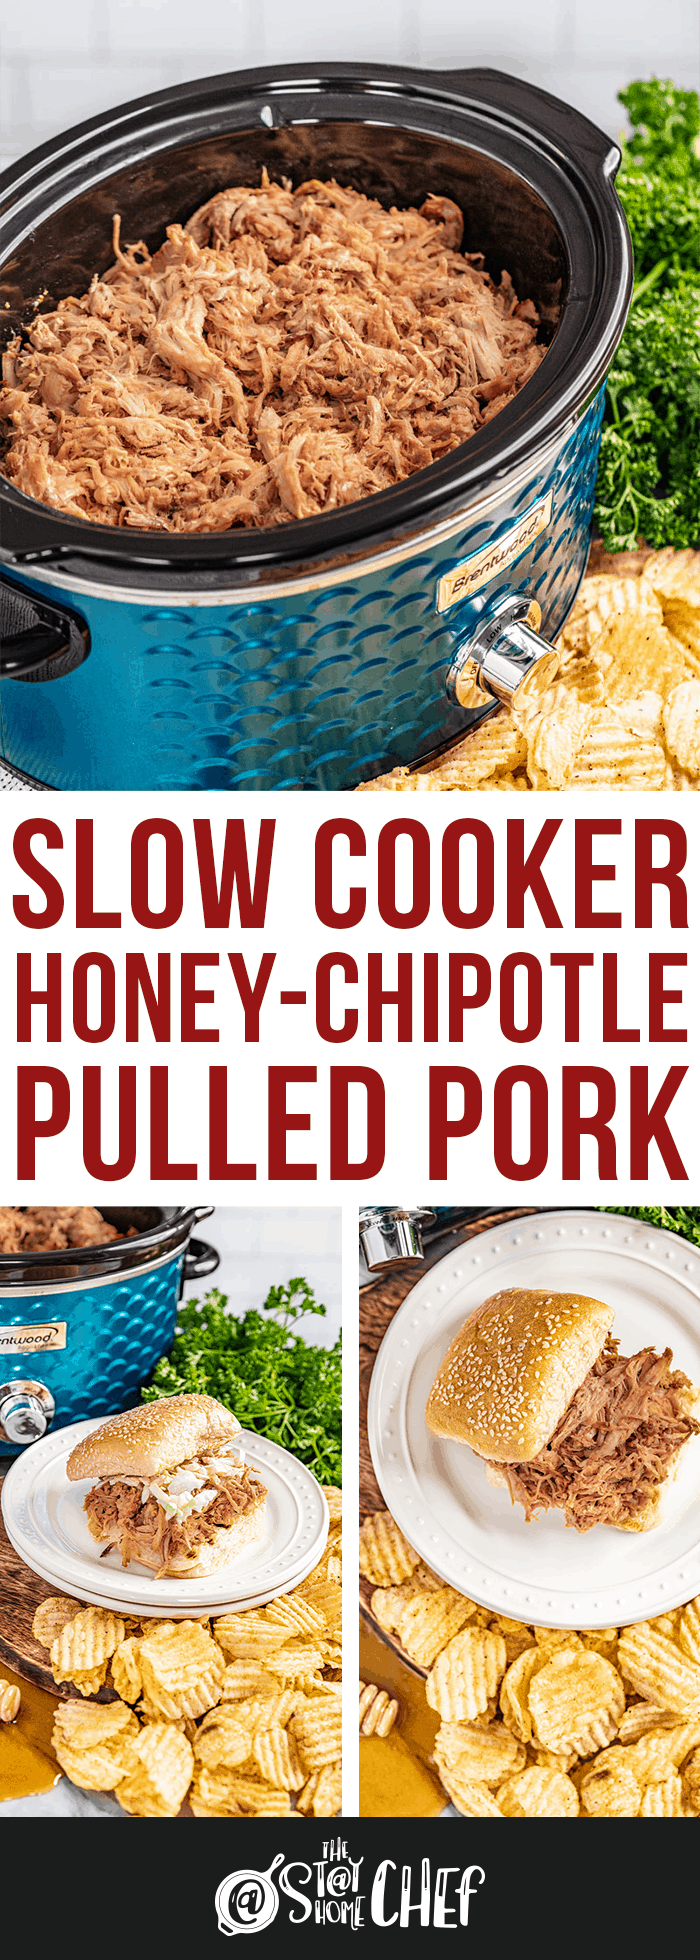 Slow Cooker Honey-Chipotle Pulled Pork